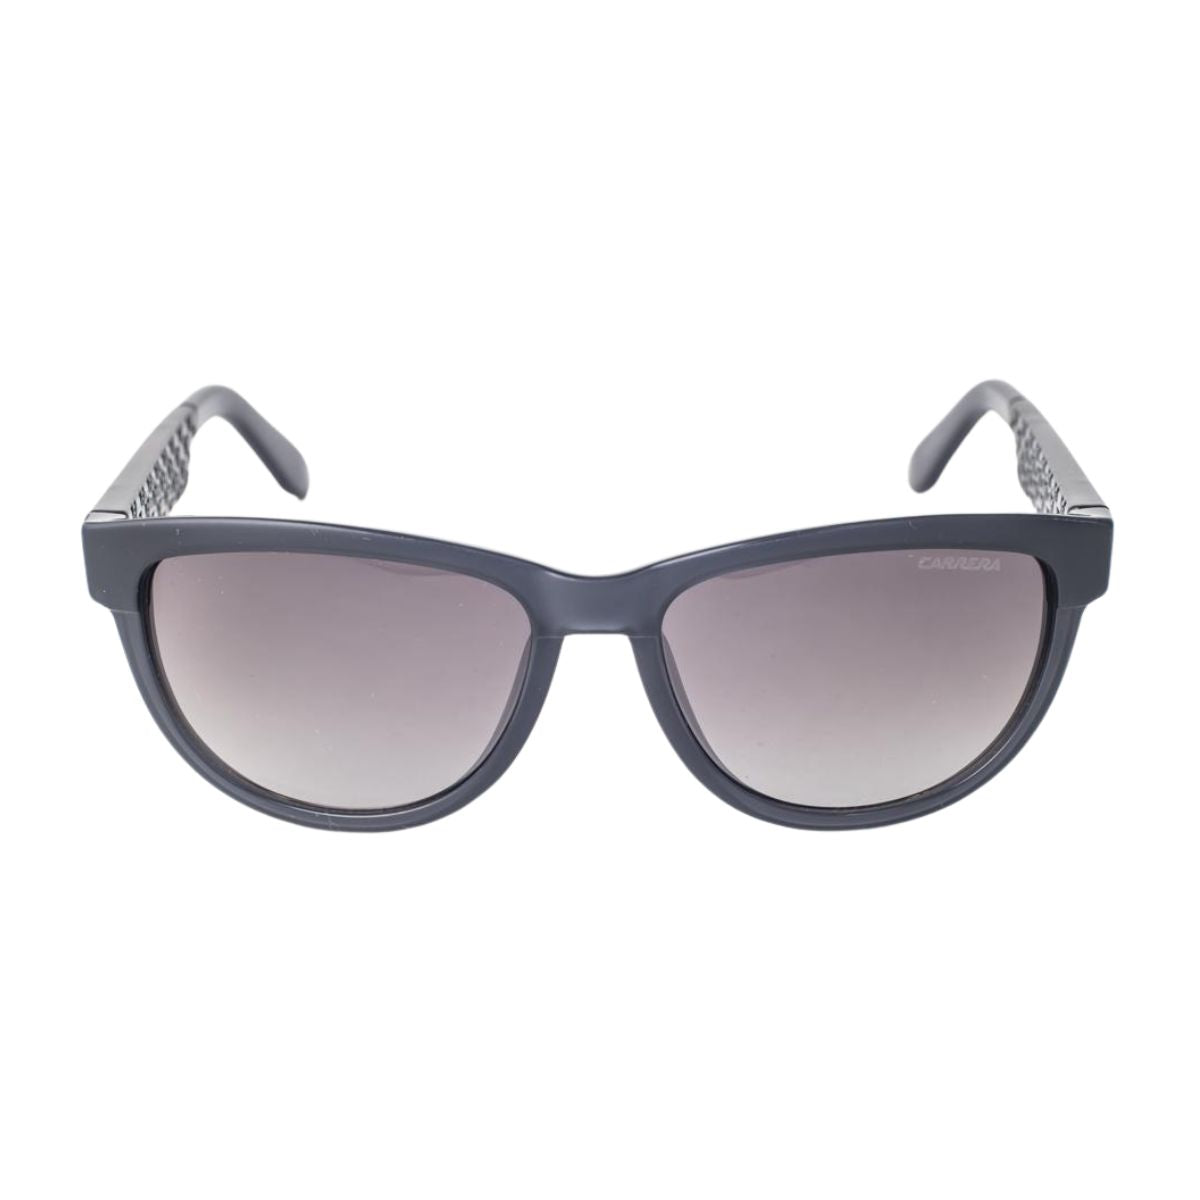 "Stylish Carrera Sunglasses For Both Mens And Womens at Optorium"